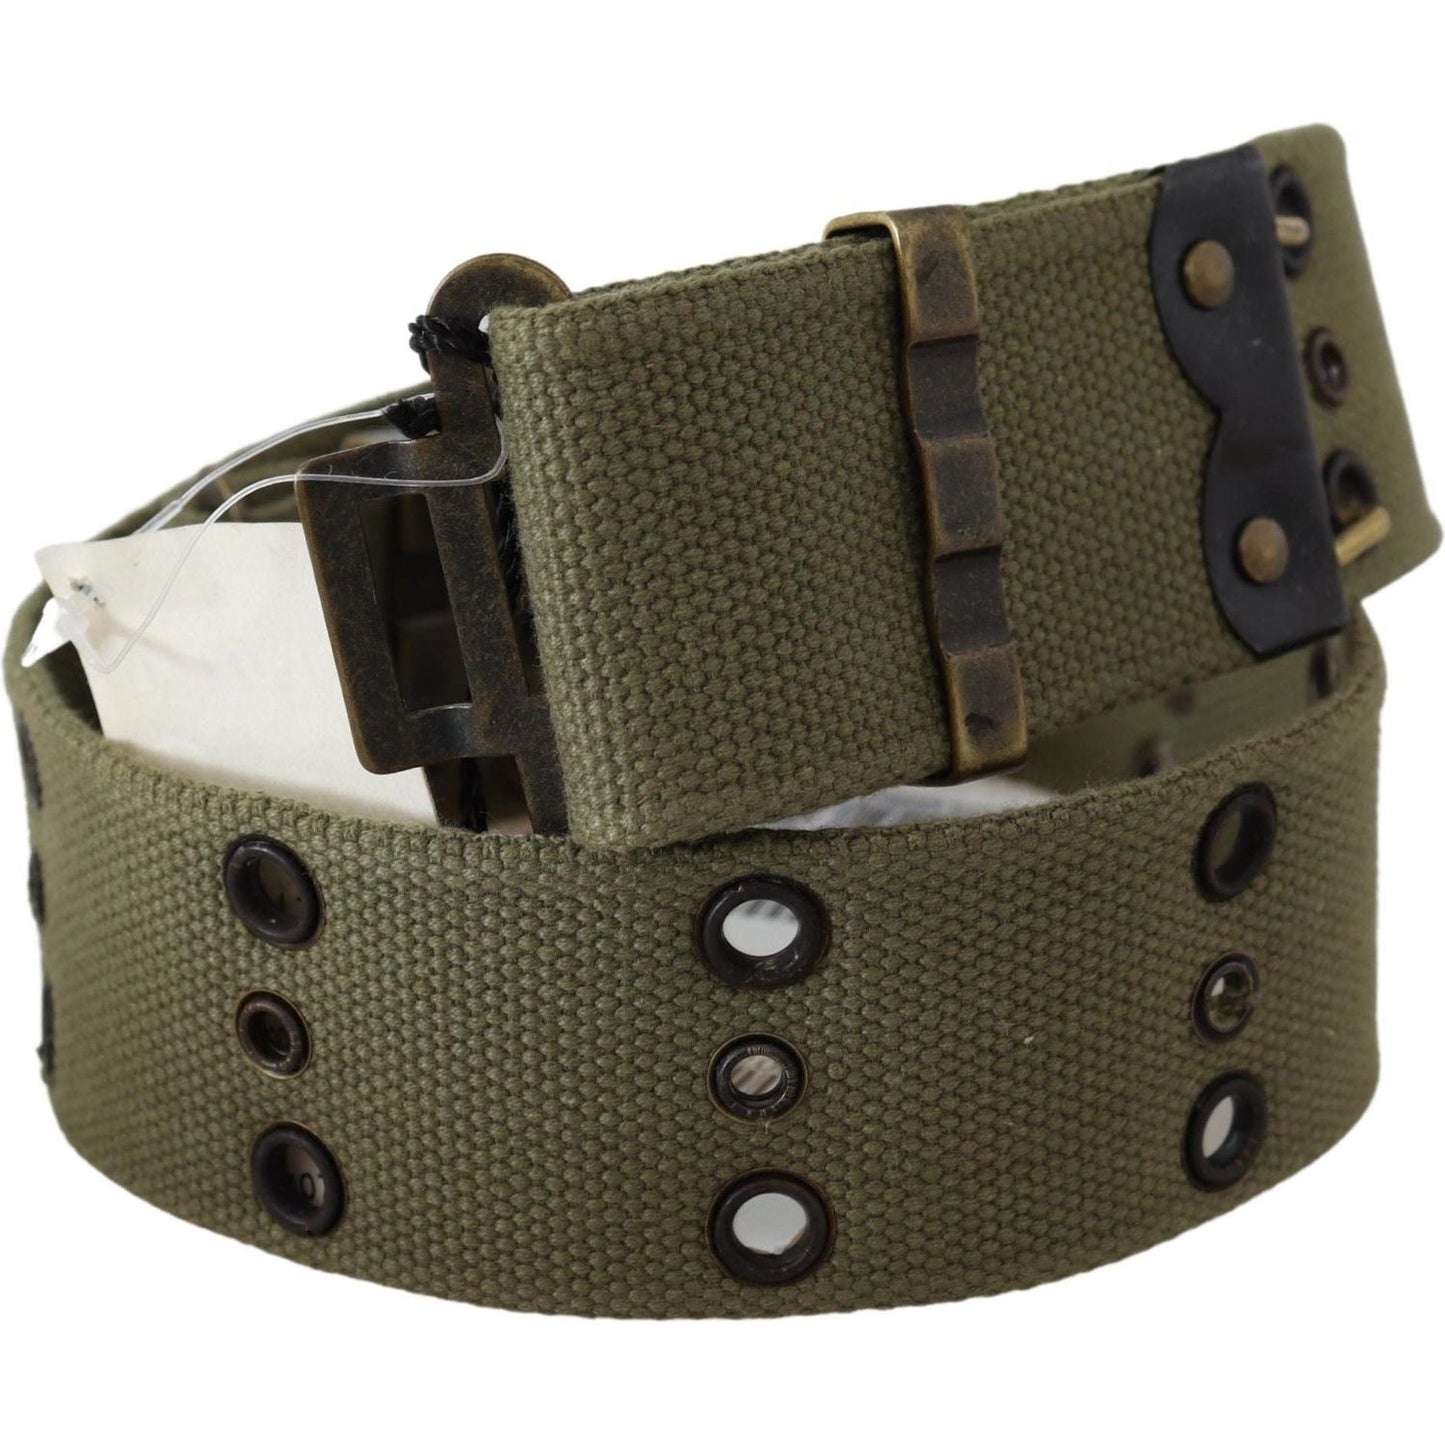 Ermanno Scervino Chic Army Green Cotton Waist Belt Belt green-100-cotton-rustic-bronze-buckle-belt IMG_0834-ef9dcd8b-d4d.jpg